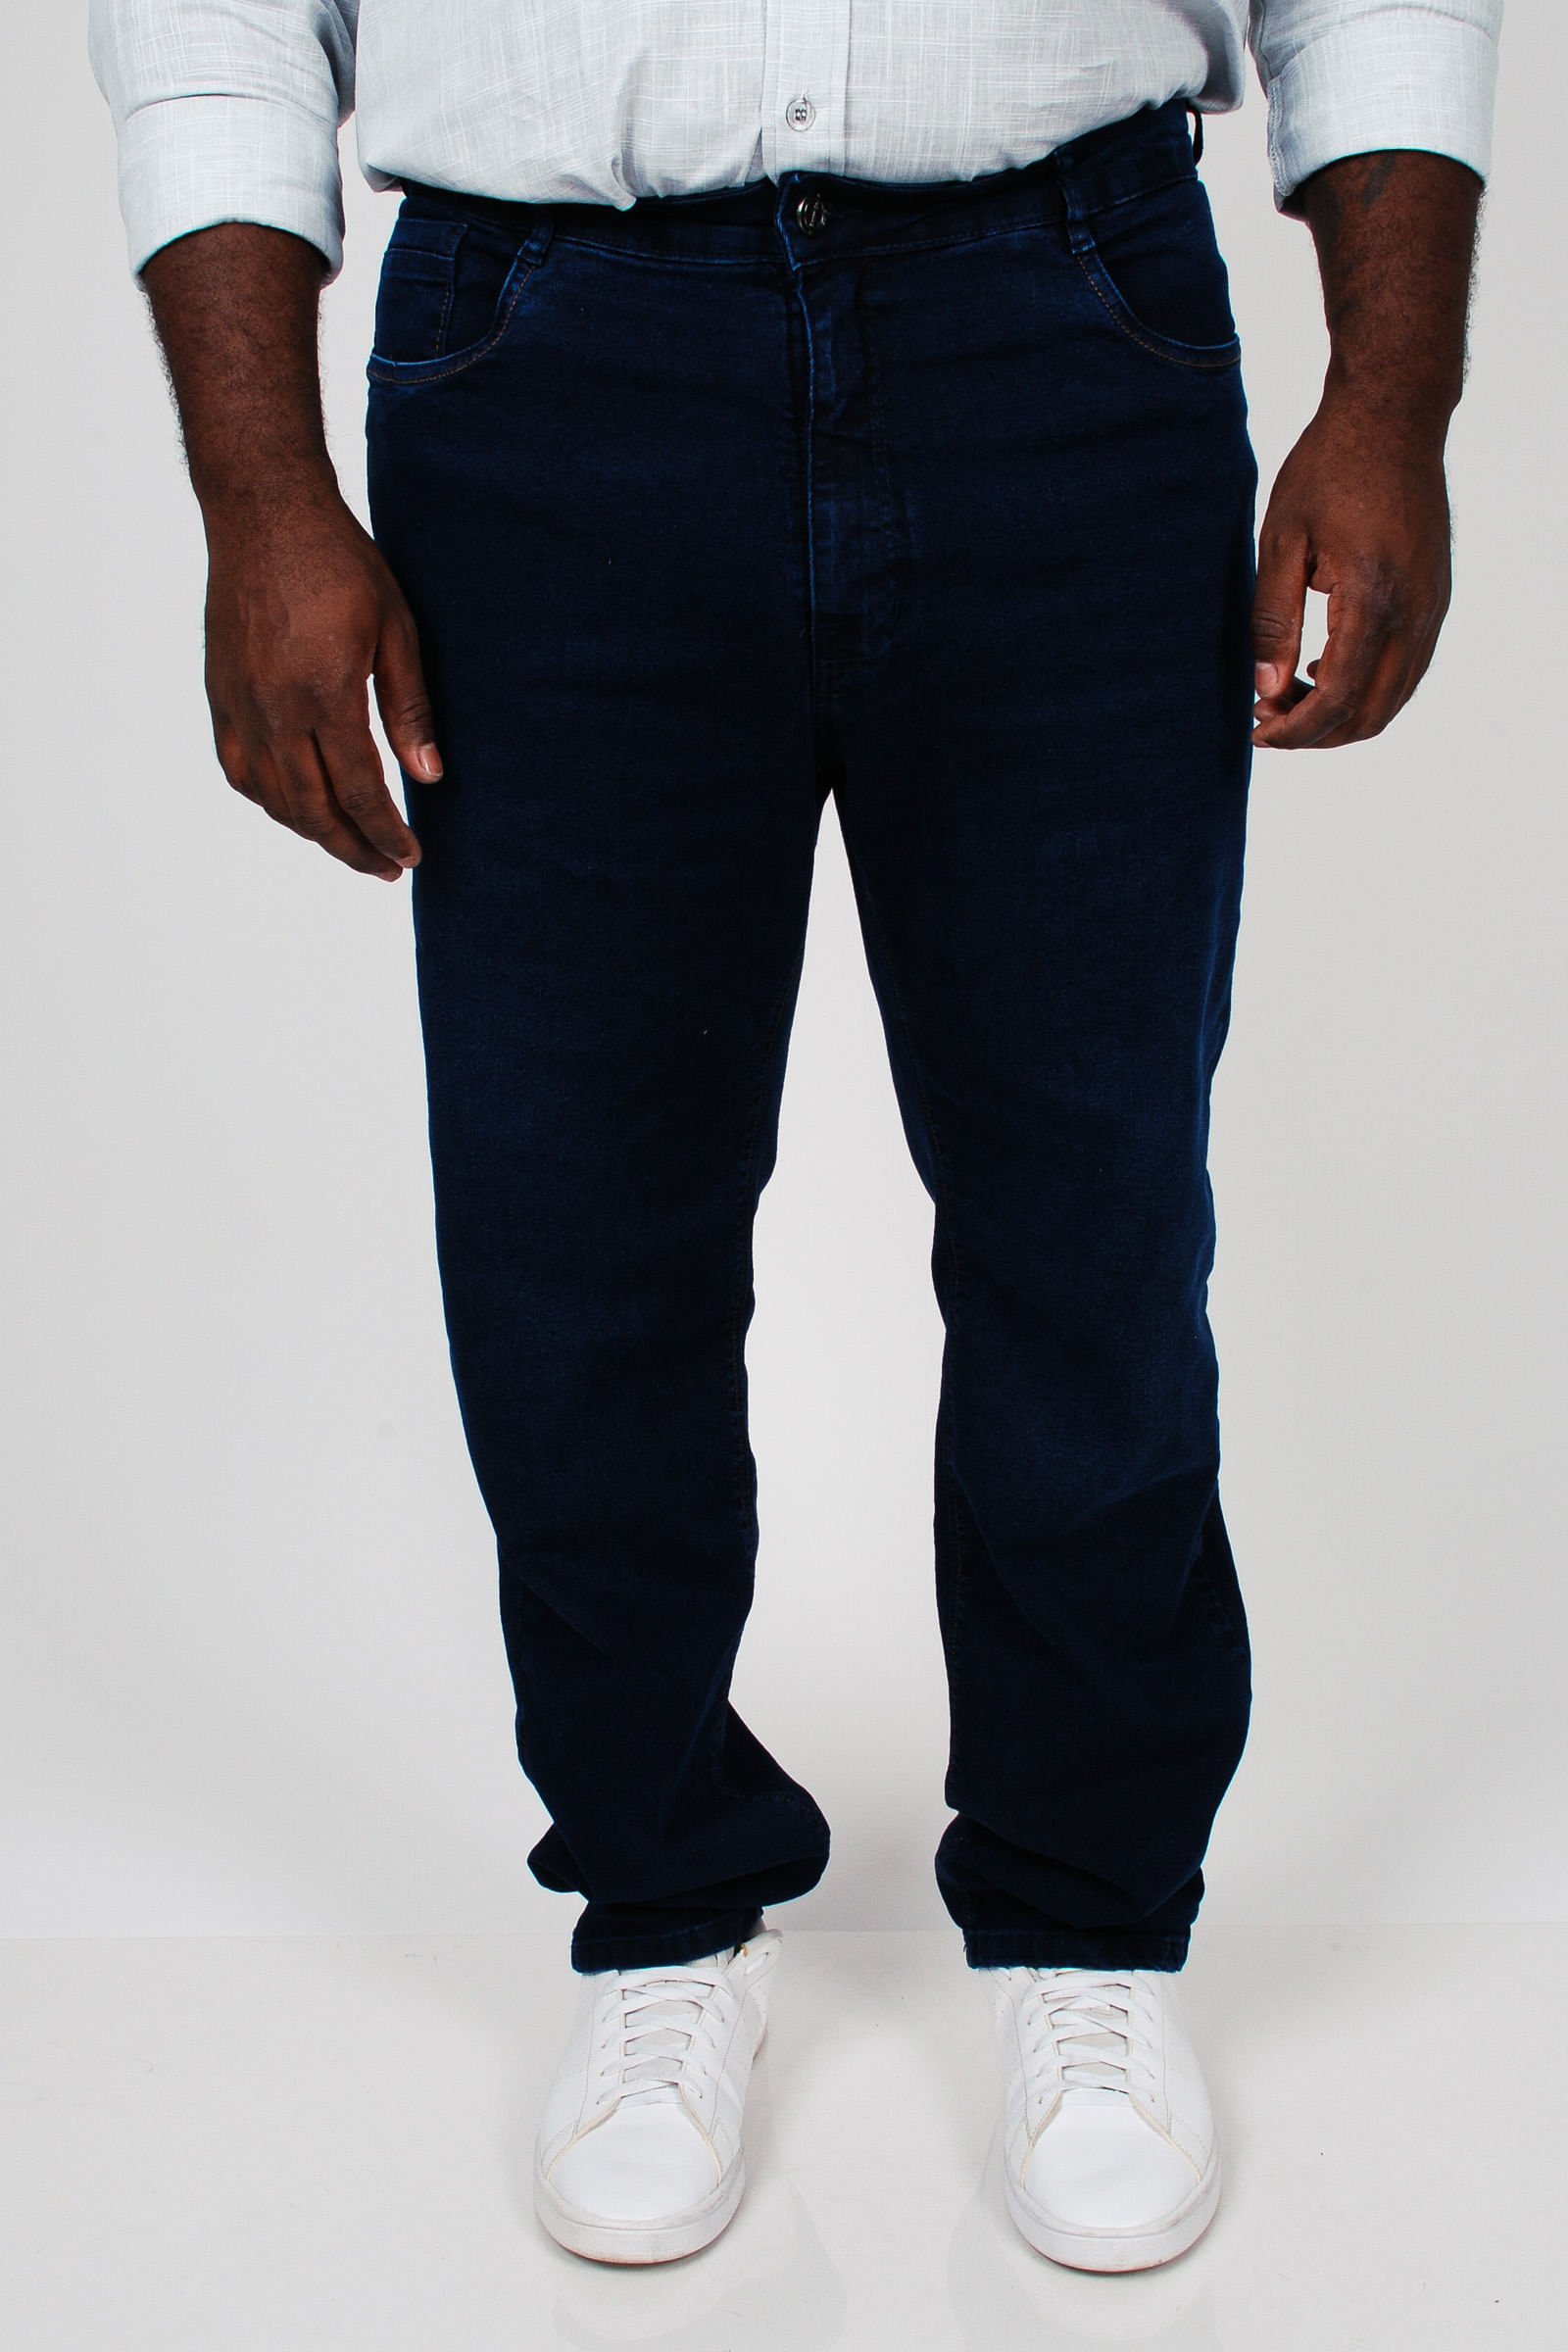 Calca-reta-jeans-masculina-plus-size_0102_2